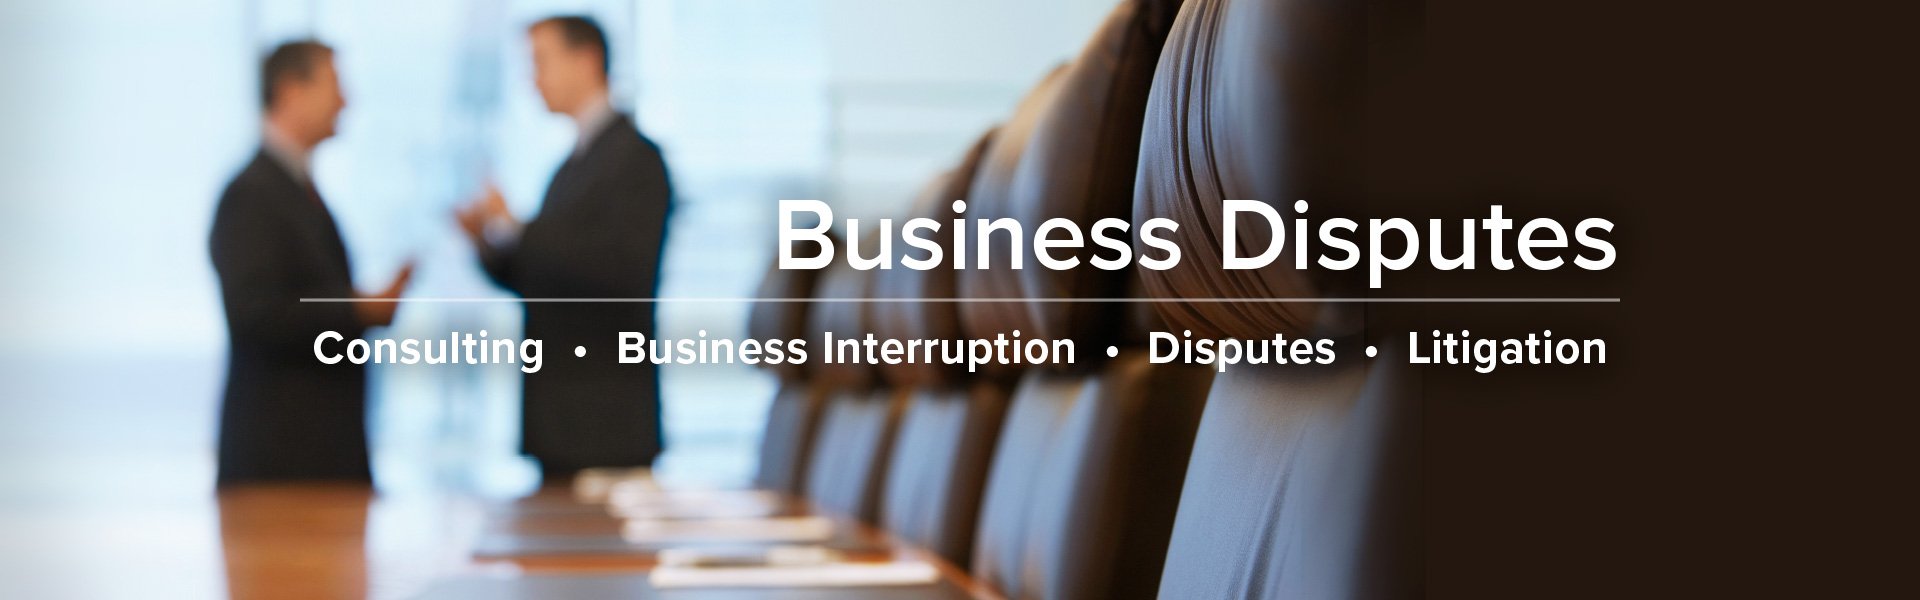 Business Disputes: Consulting, Business Interruption, Disputes, Litigations